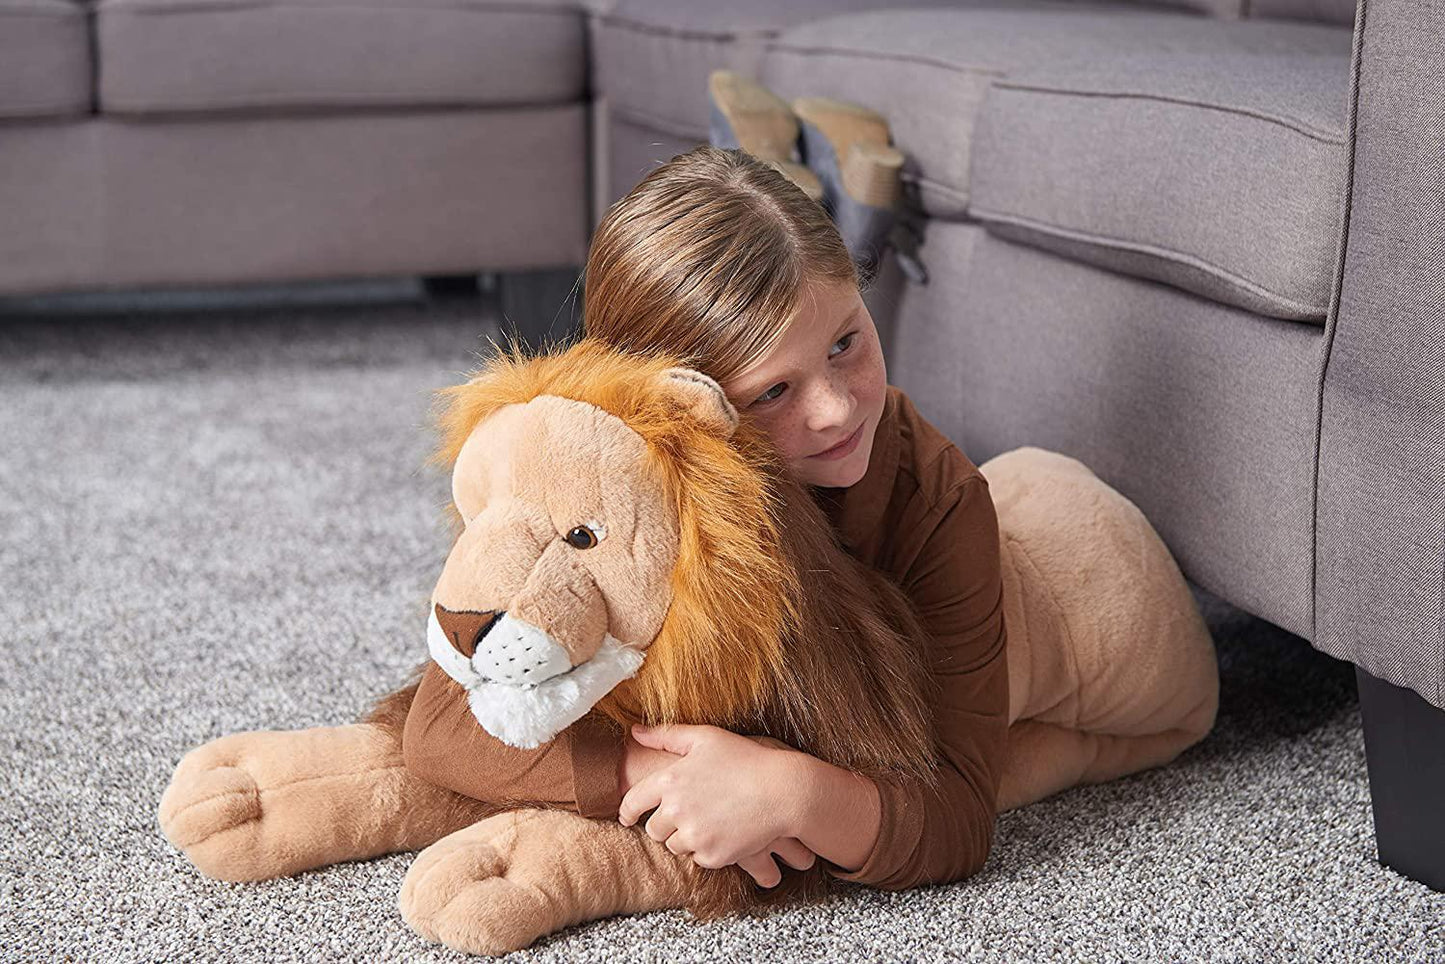 Wild Republic Jumbo Lion Plush, Giant Stuffed Animal, Plush Toy, Gifts for Kids, 30 Inches by Wild Republic